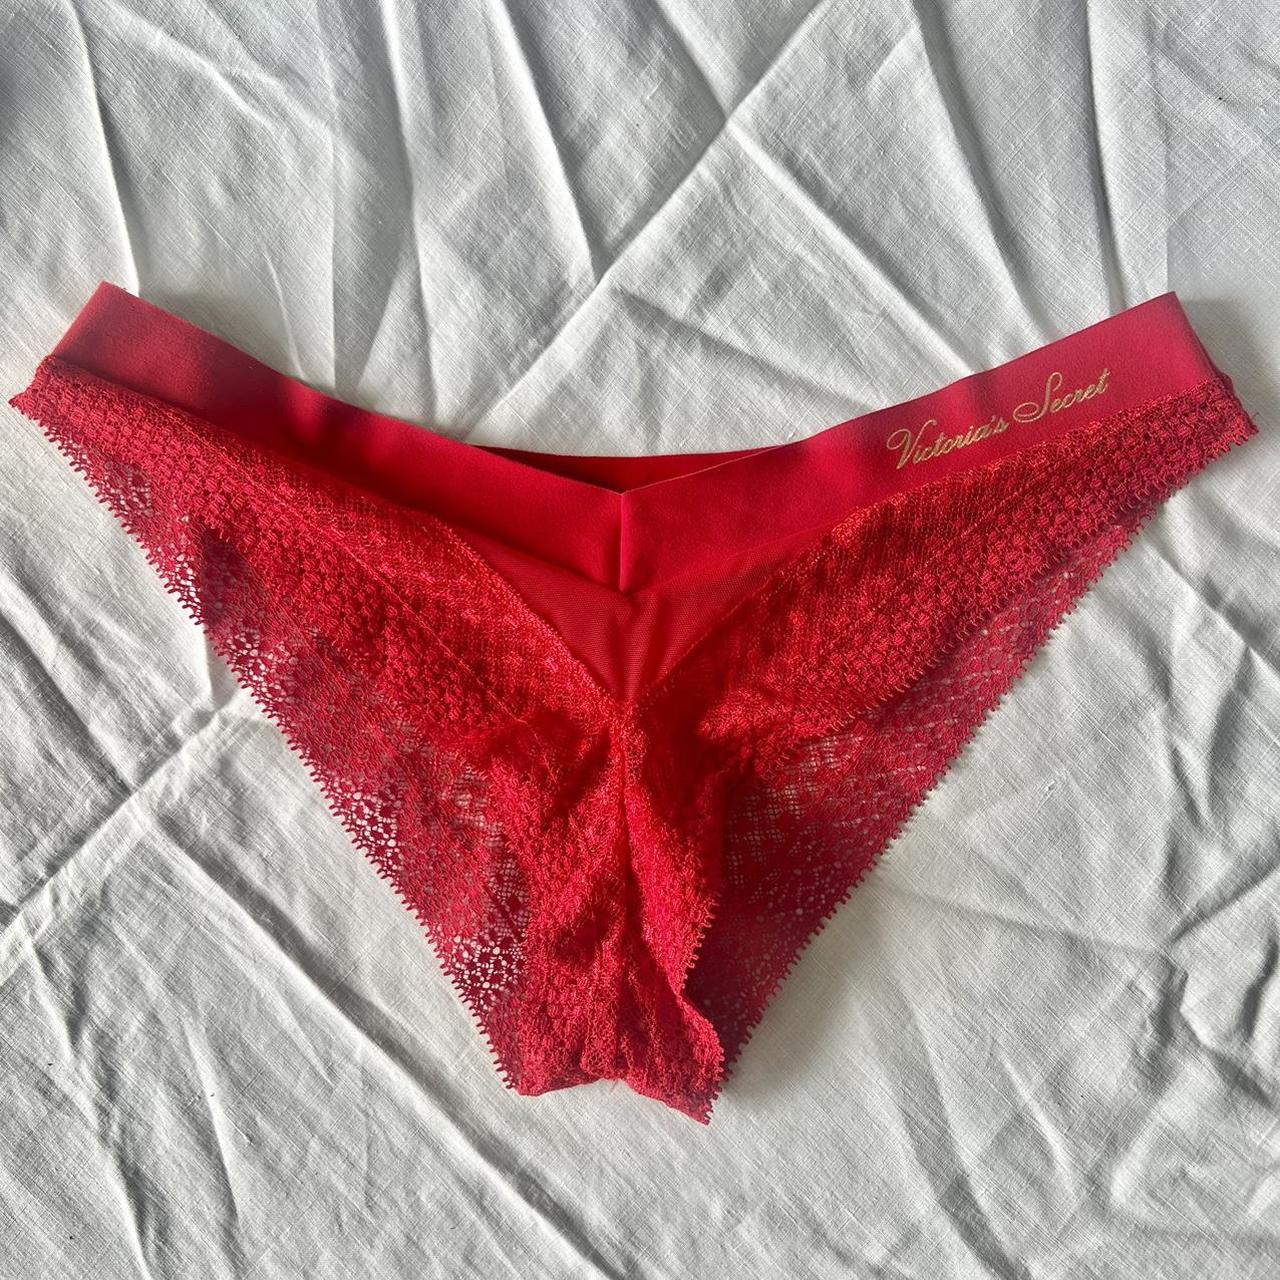 VS Panties, Victoria’s Secret red lace panty, BRAND